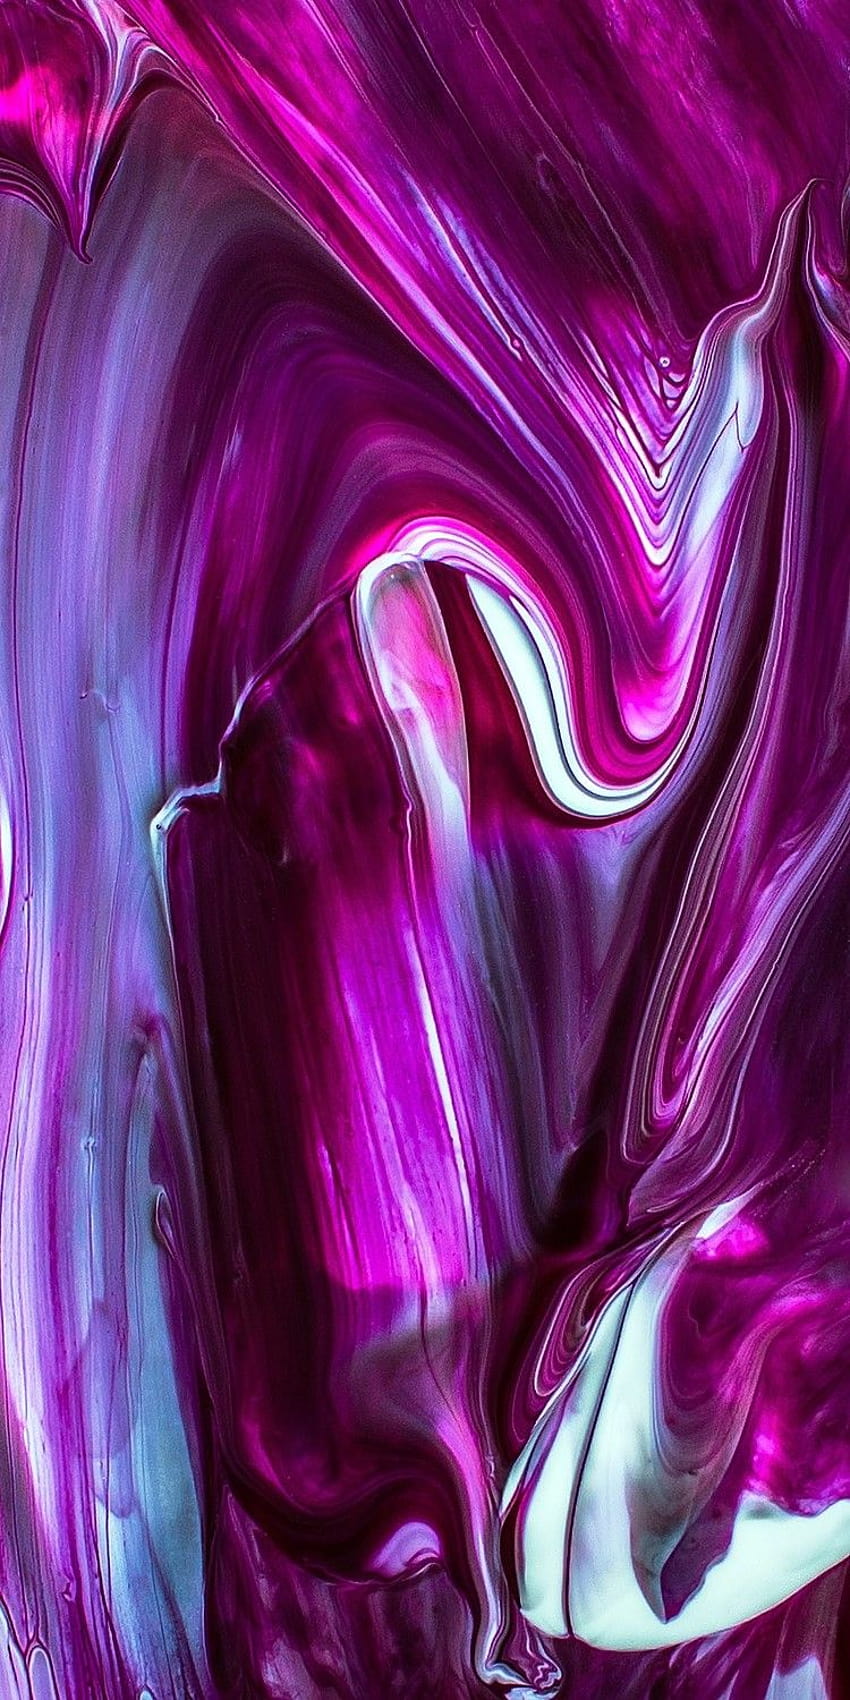 Rogene Espino pada Abstrak °Amoled °Liquid °Gradien, cairan abstrak ungu merah jambu dan hitam wallpaper ponsel HD